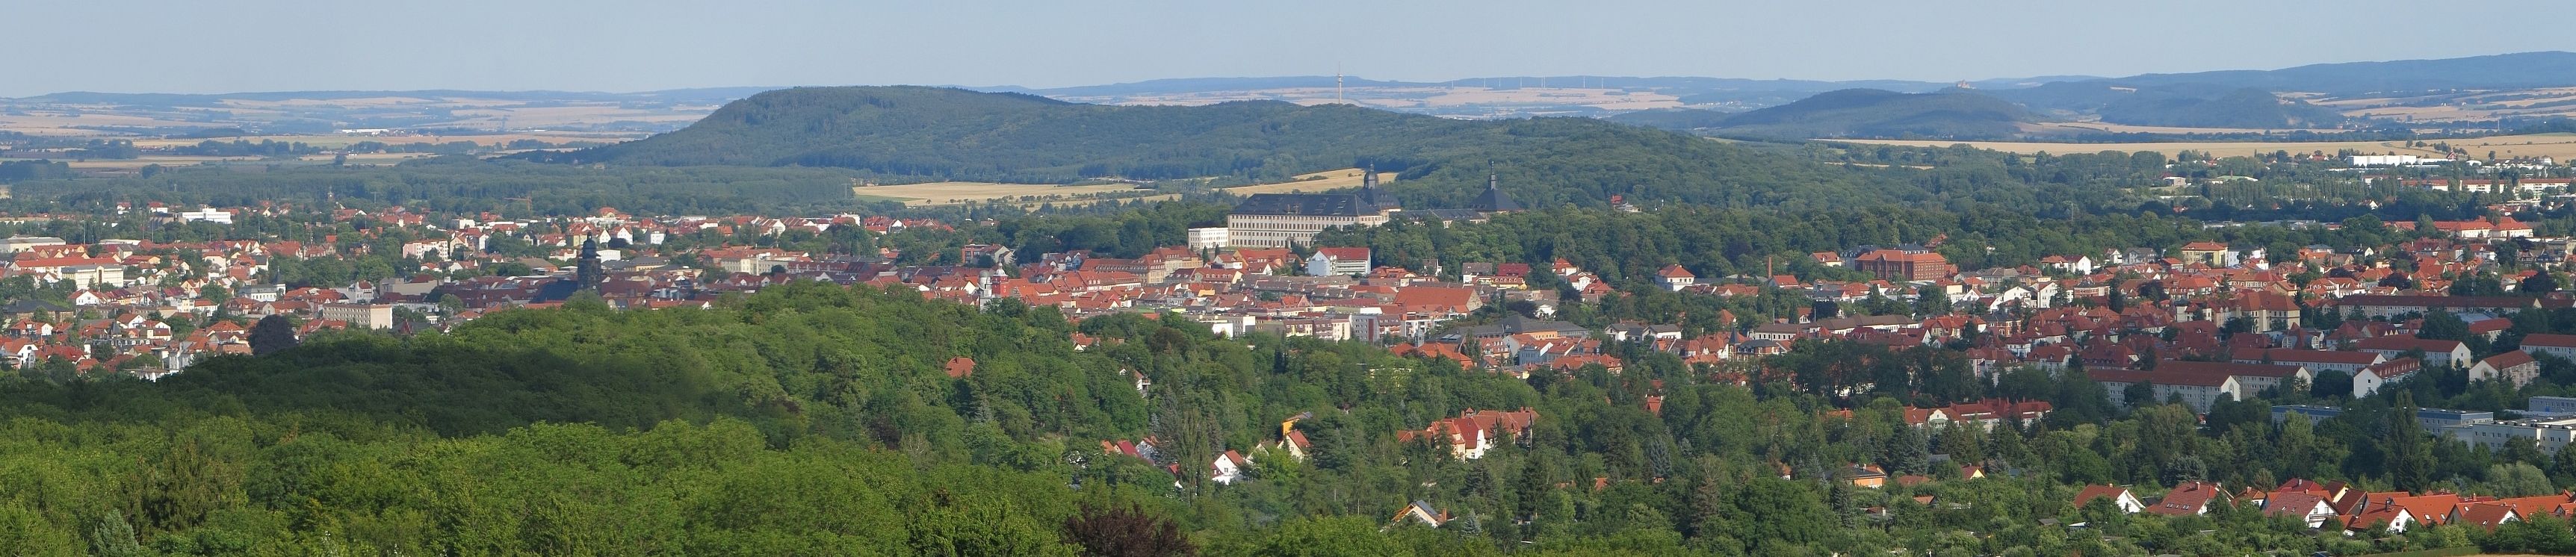 Panorama vom Bürgerturm bei Gotha